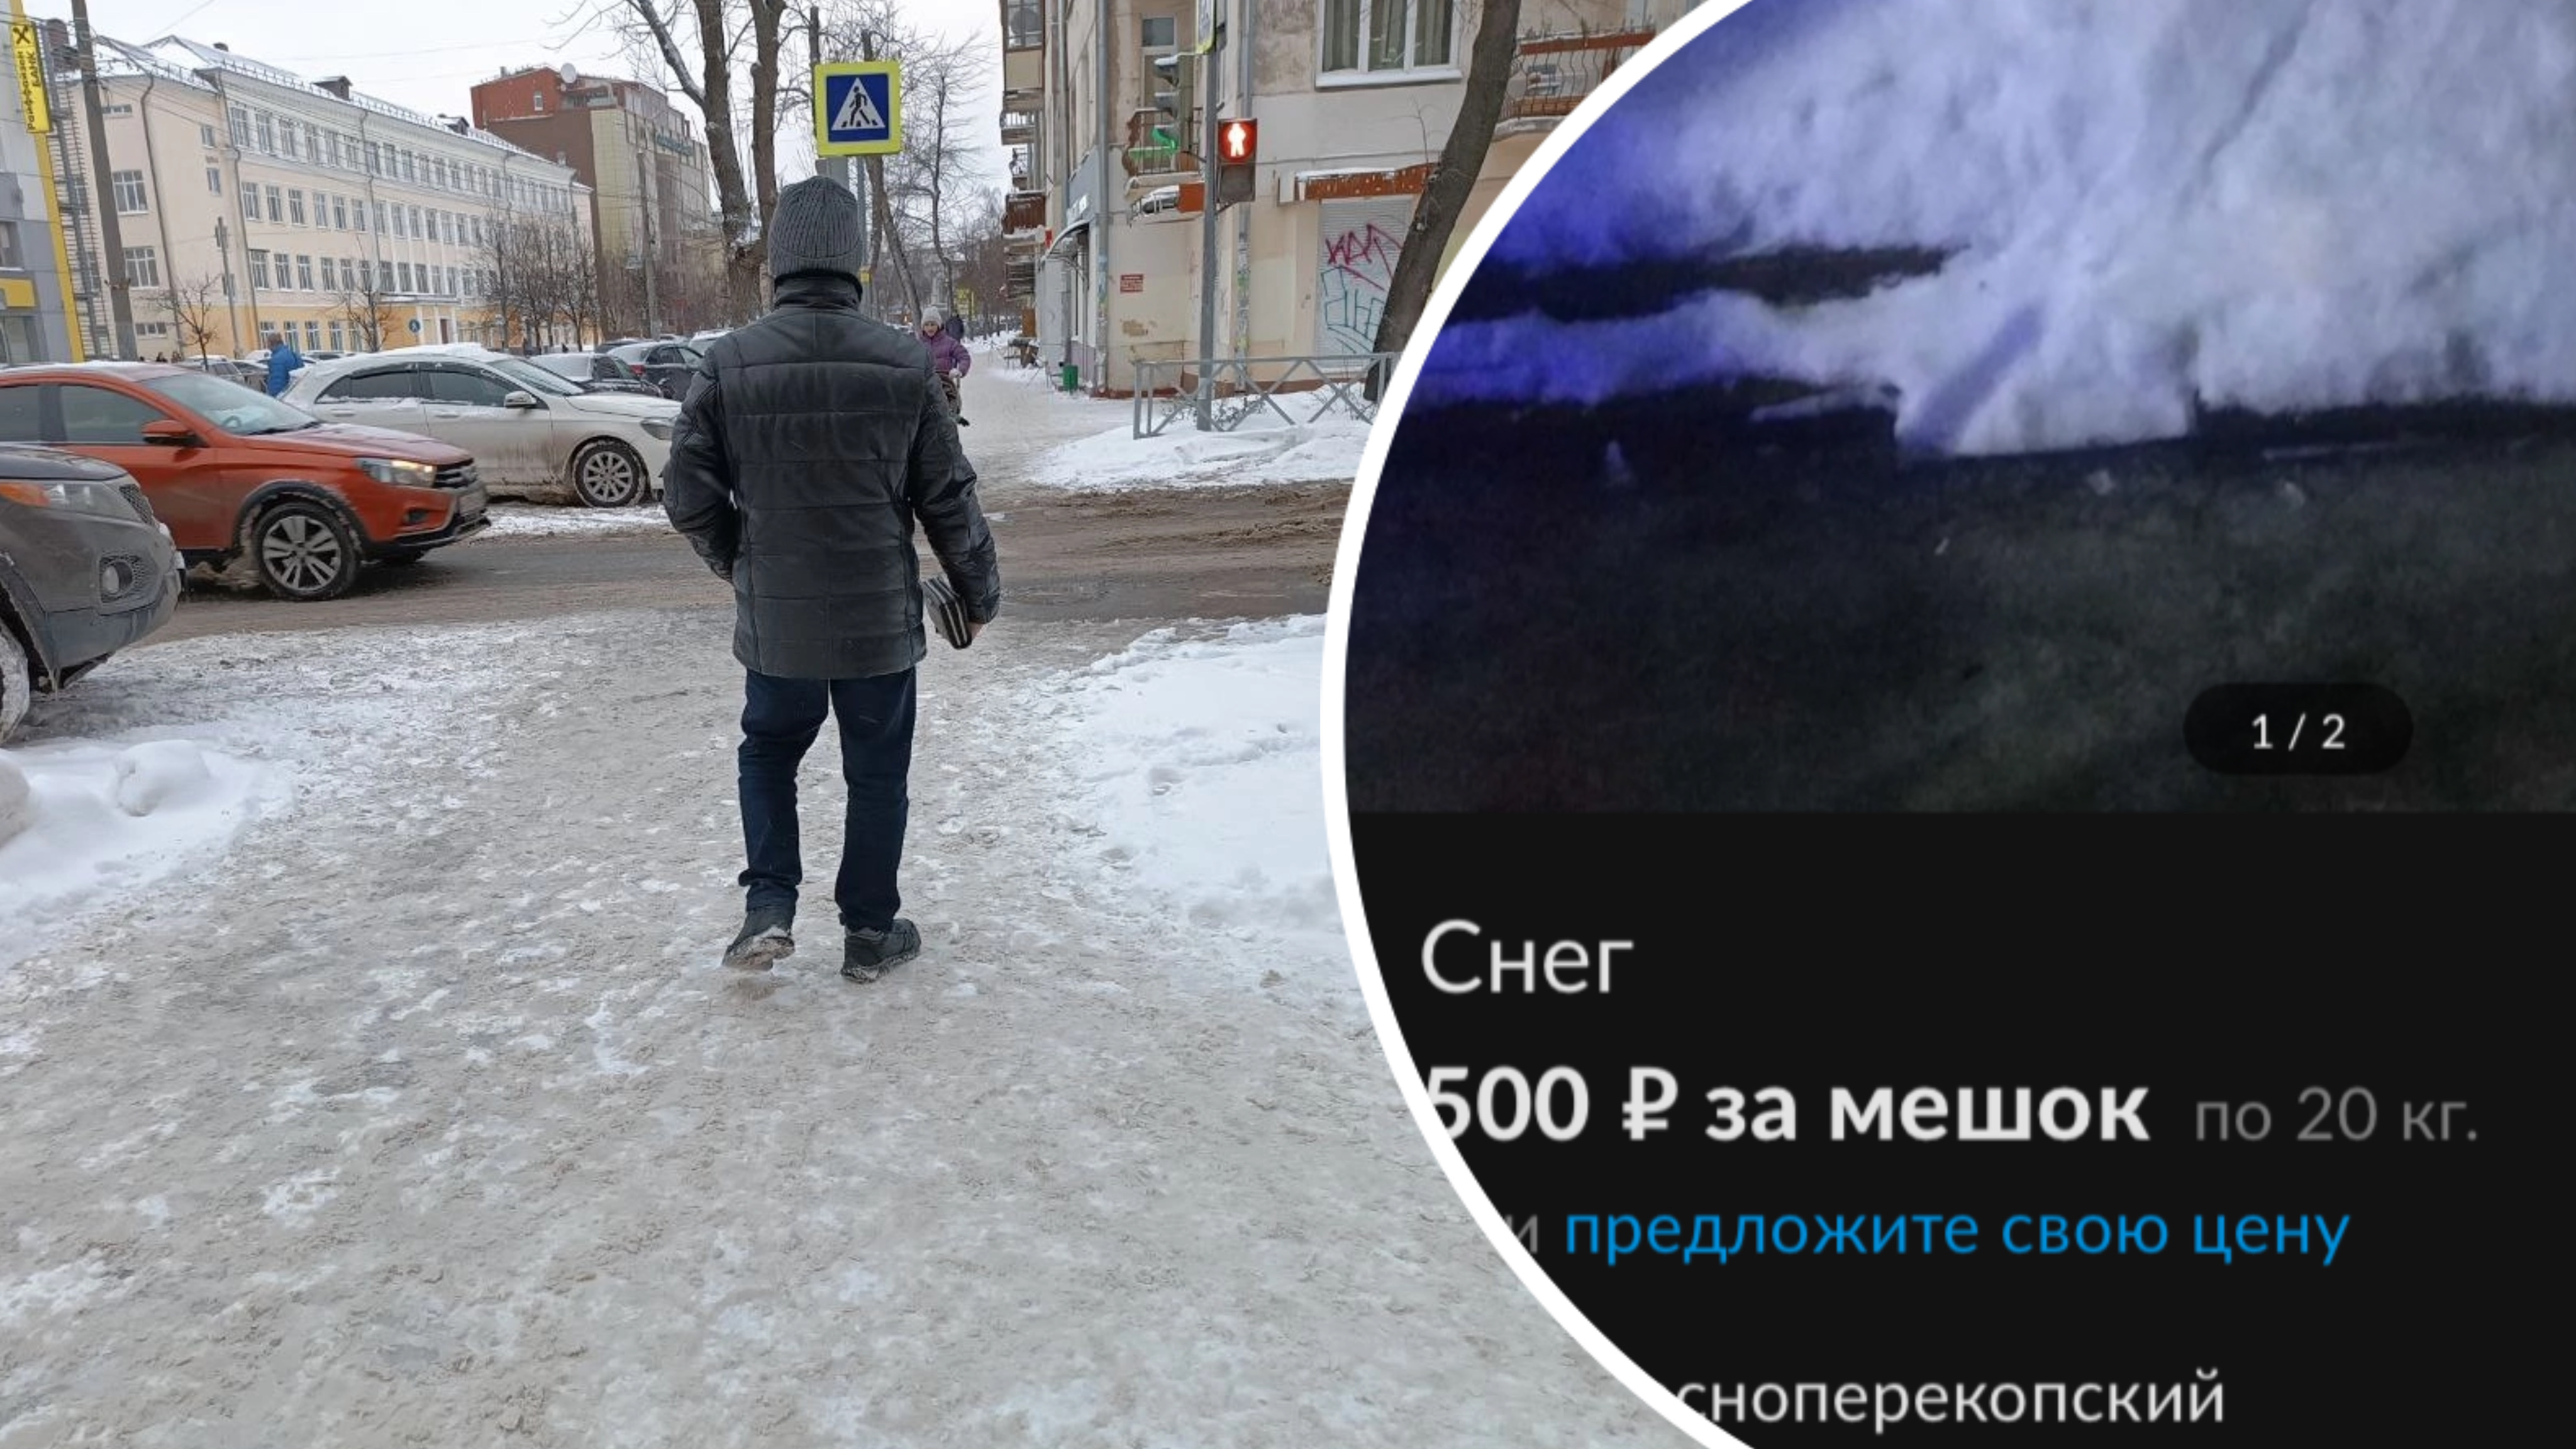 «500 рублей за мешок»: ярославец решил построить бизнес на продаже снега 